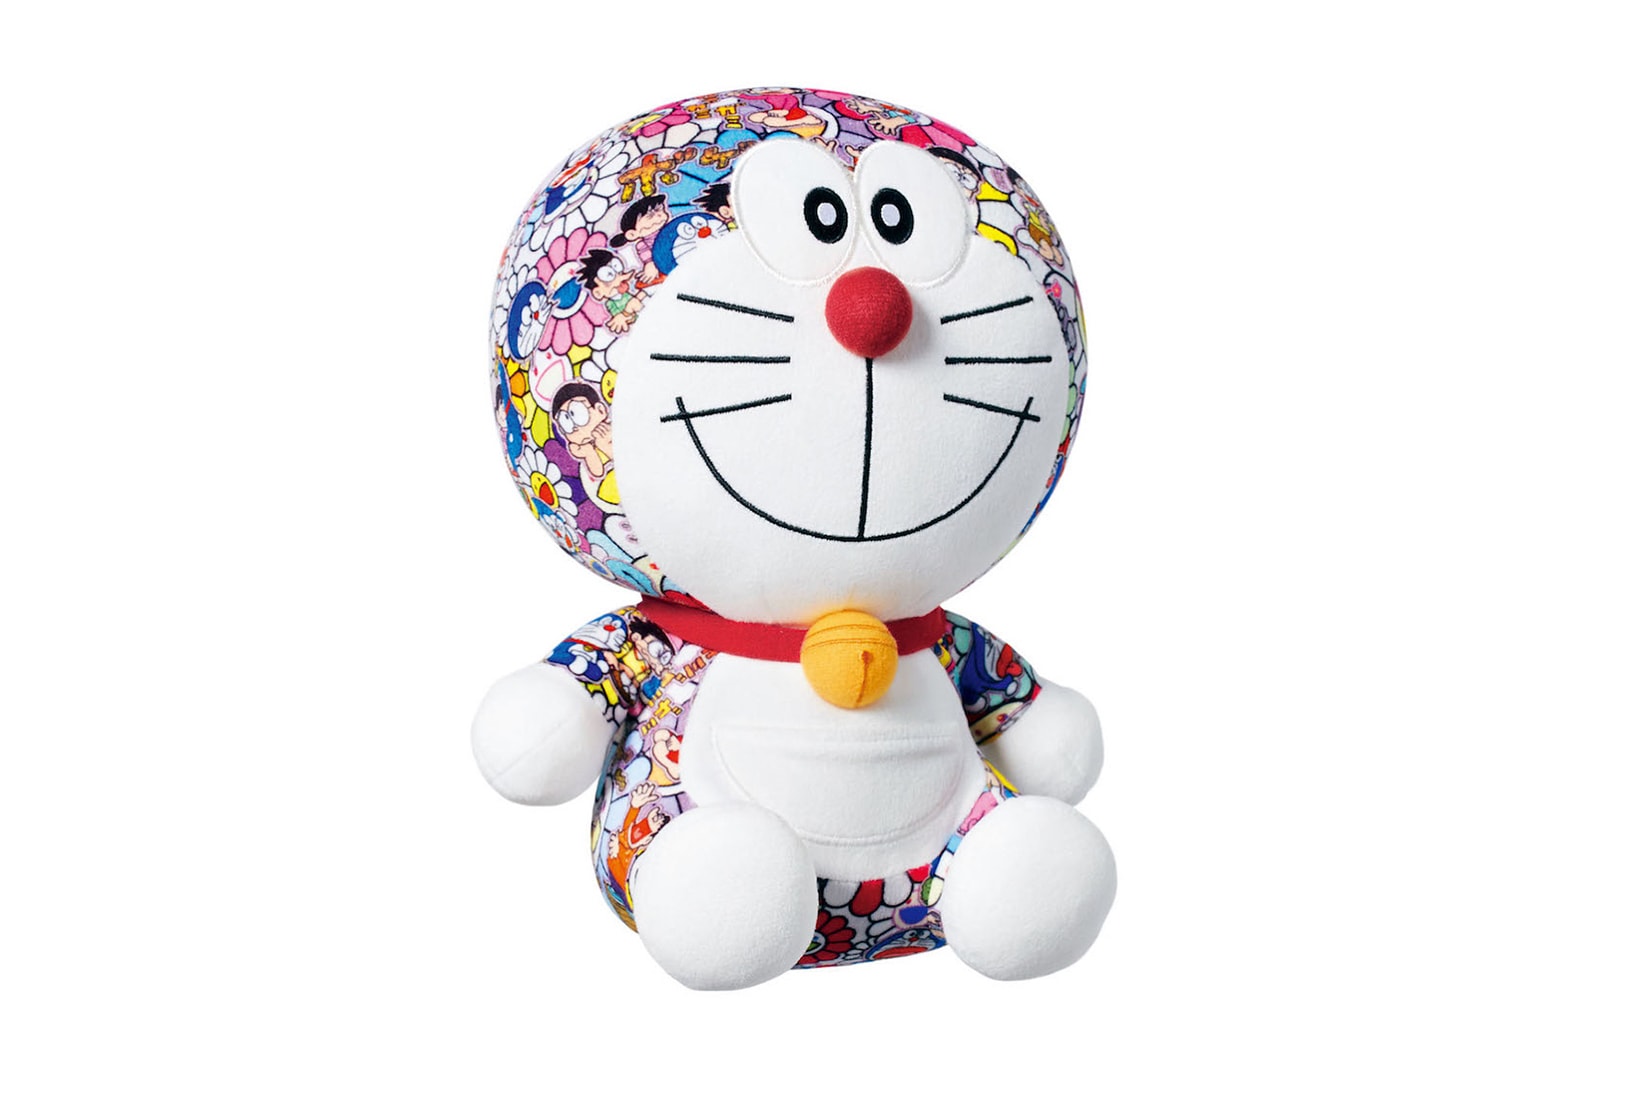 Takashi Murakami Doraemon Uniqlo UT Collection collaboration april 26 2018 release date info drop may global Fujiko Fujio